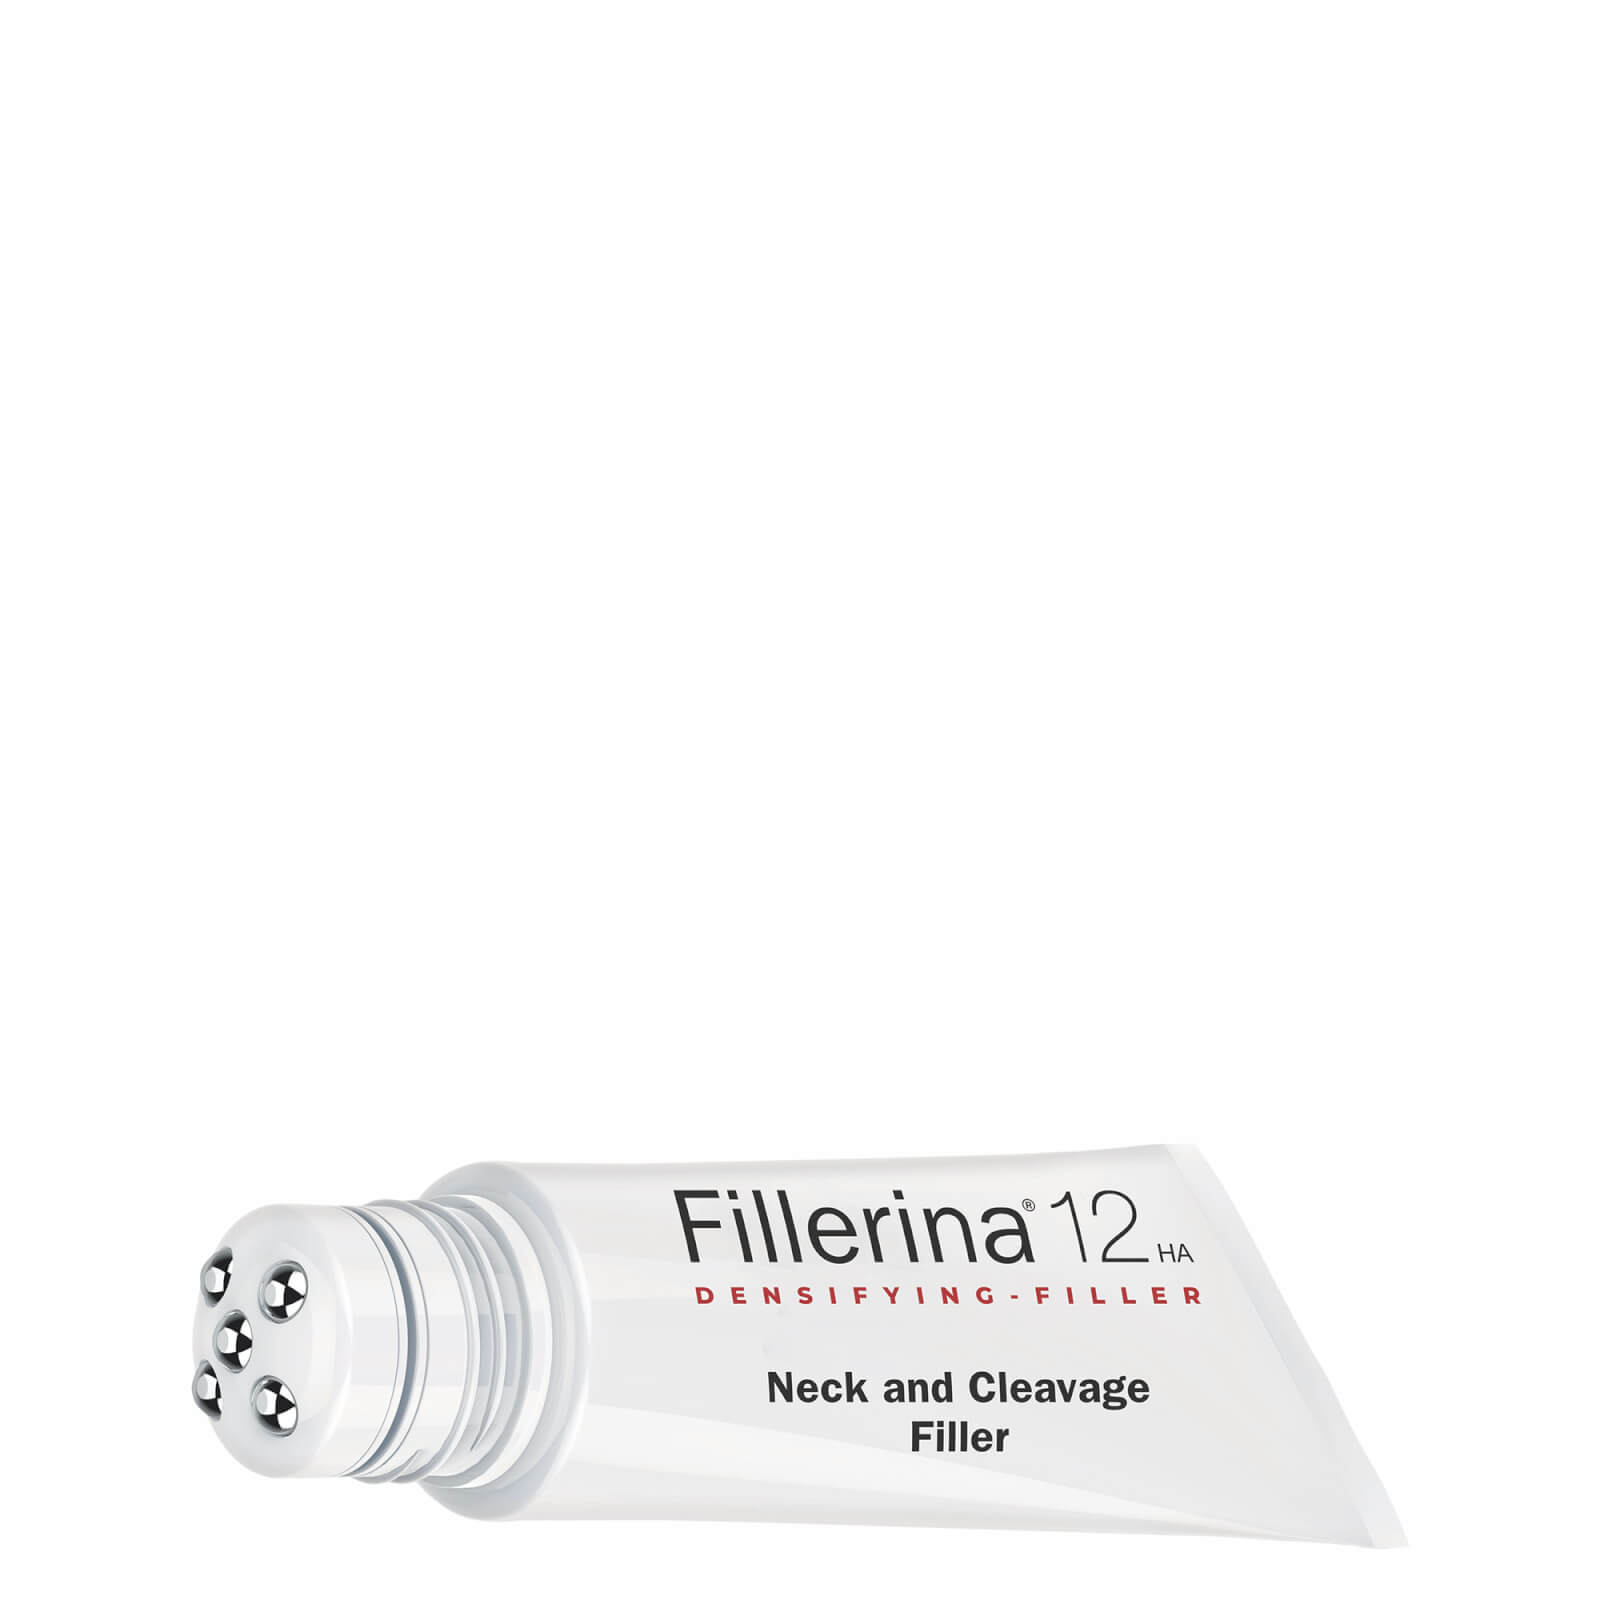 Fillerina 12 Densifying-filler - Neck And Cleavage - Grade 5 30ml